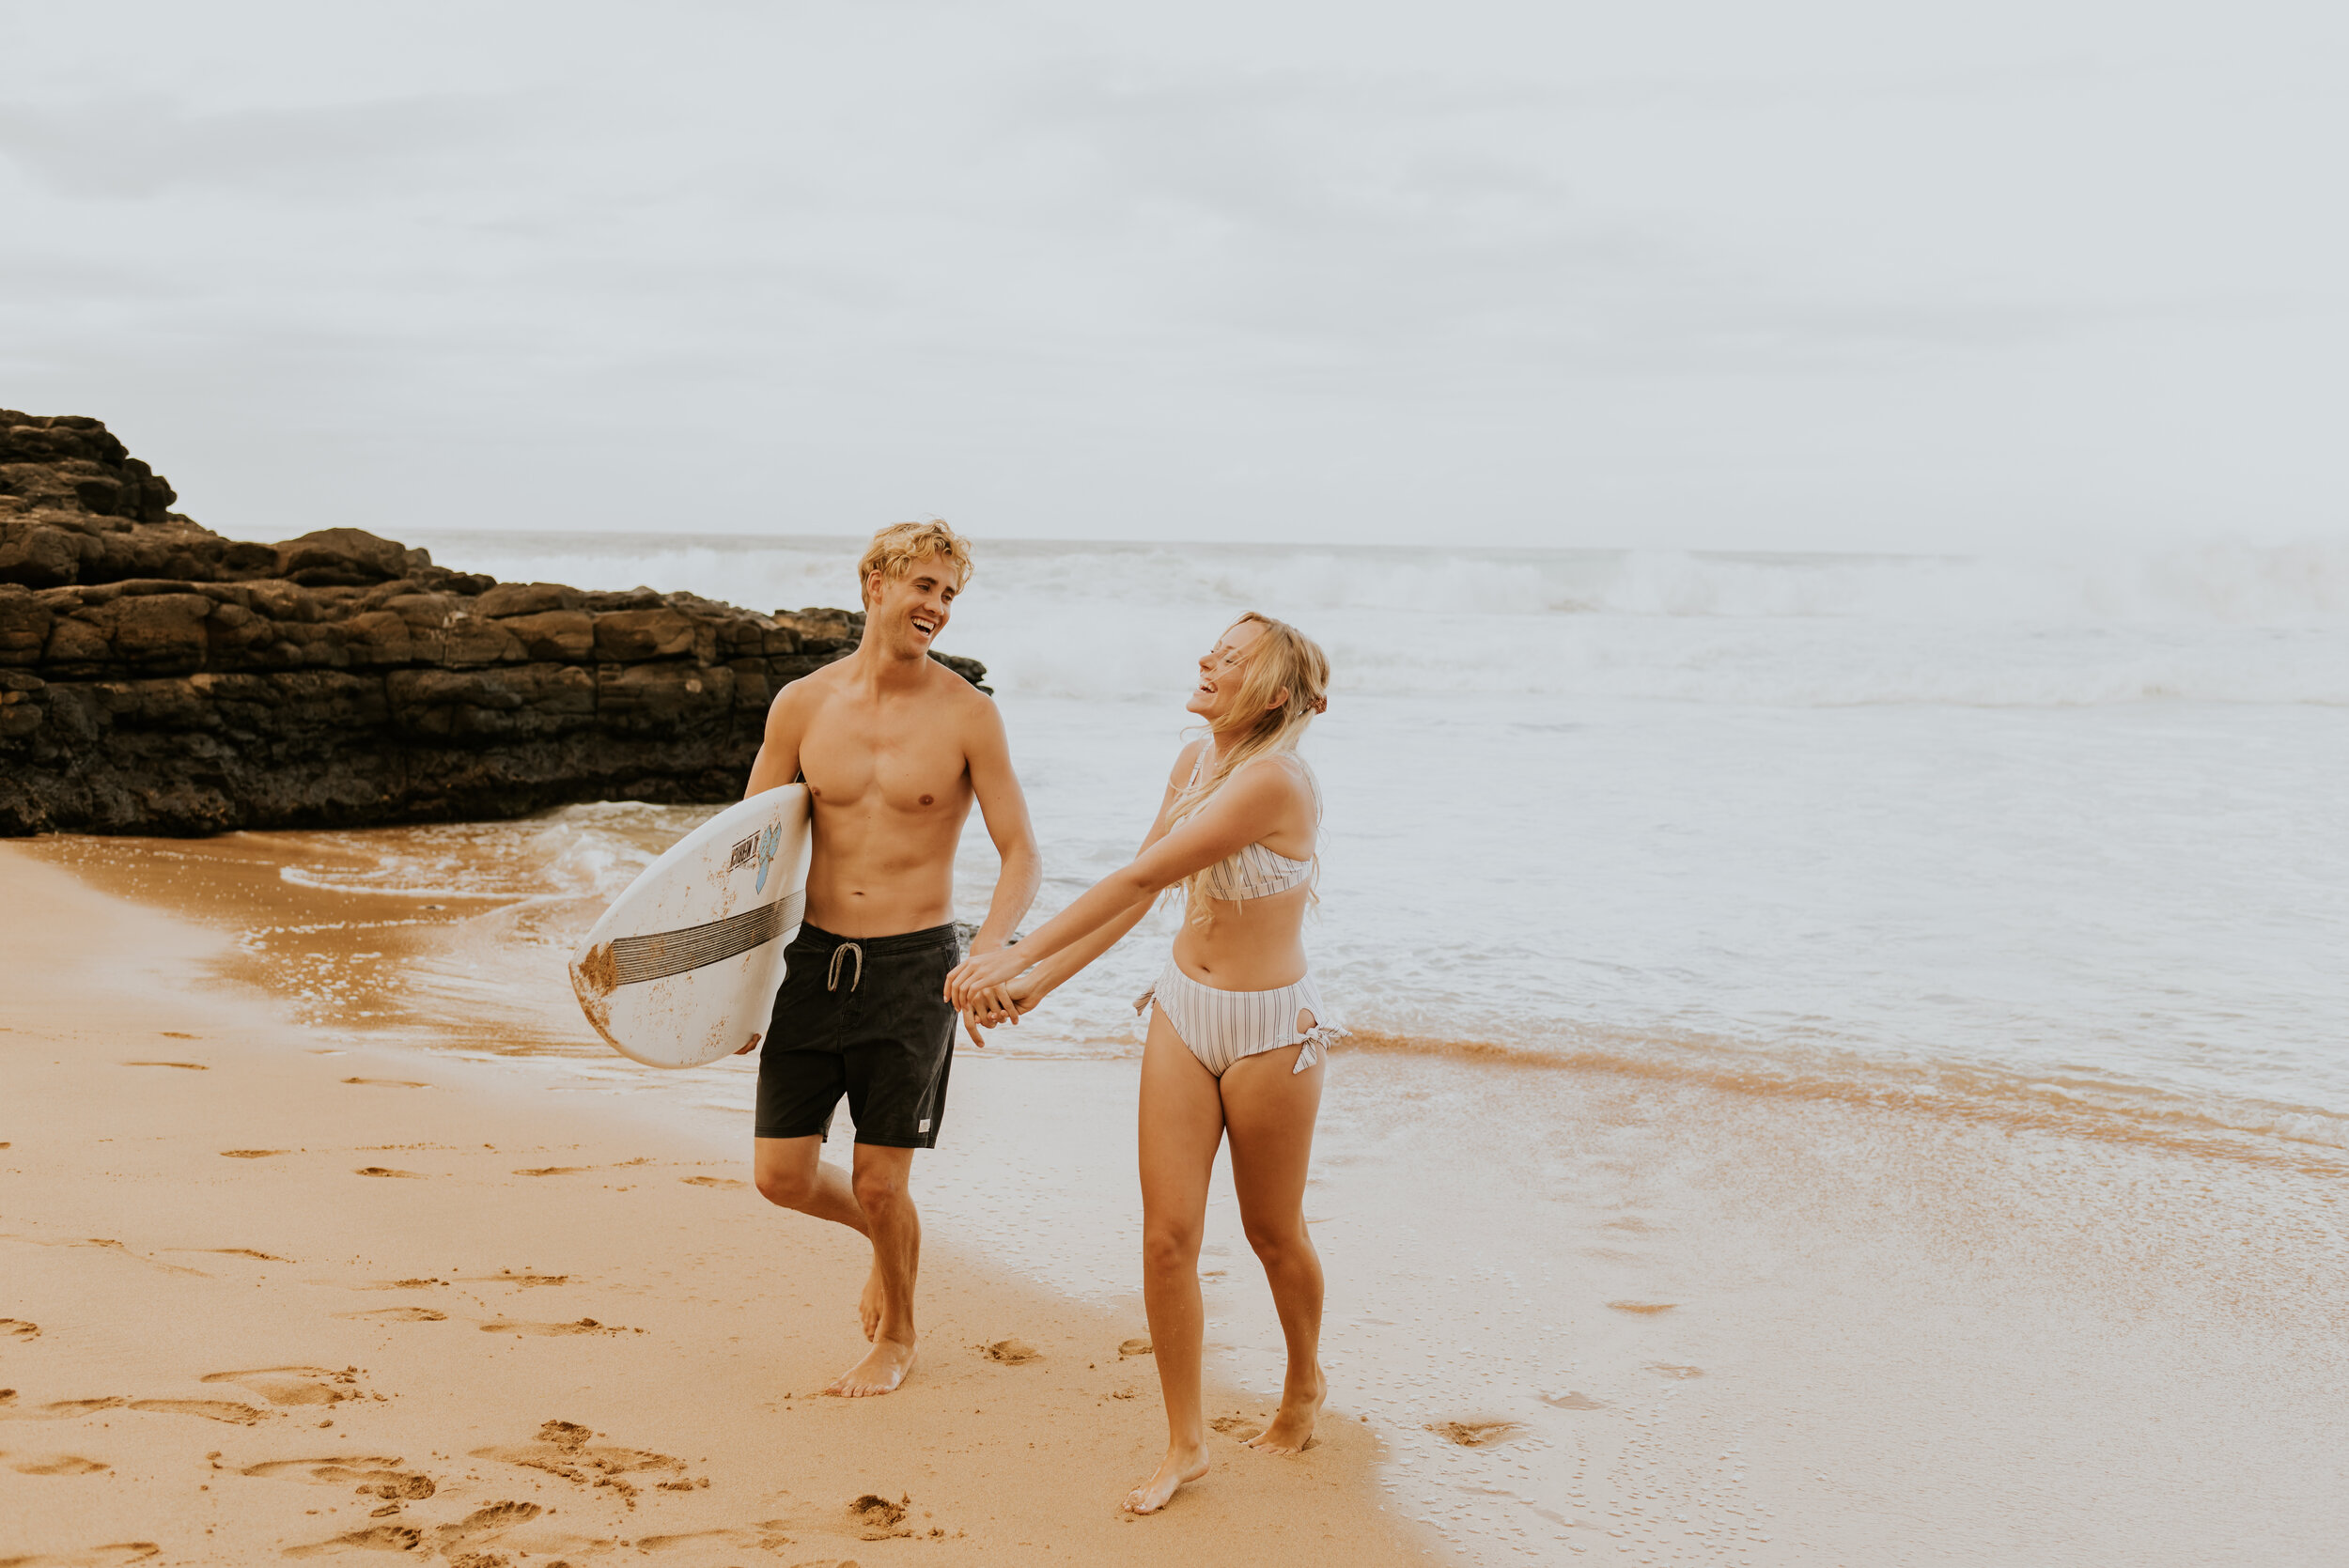 beata kulesza share tumblr naked beach couples photos